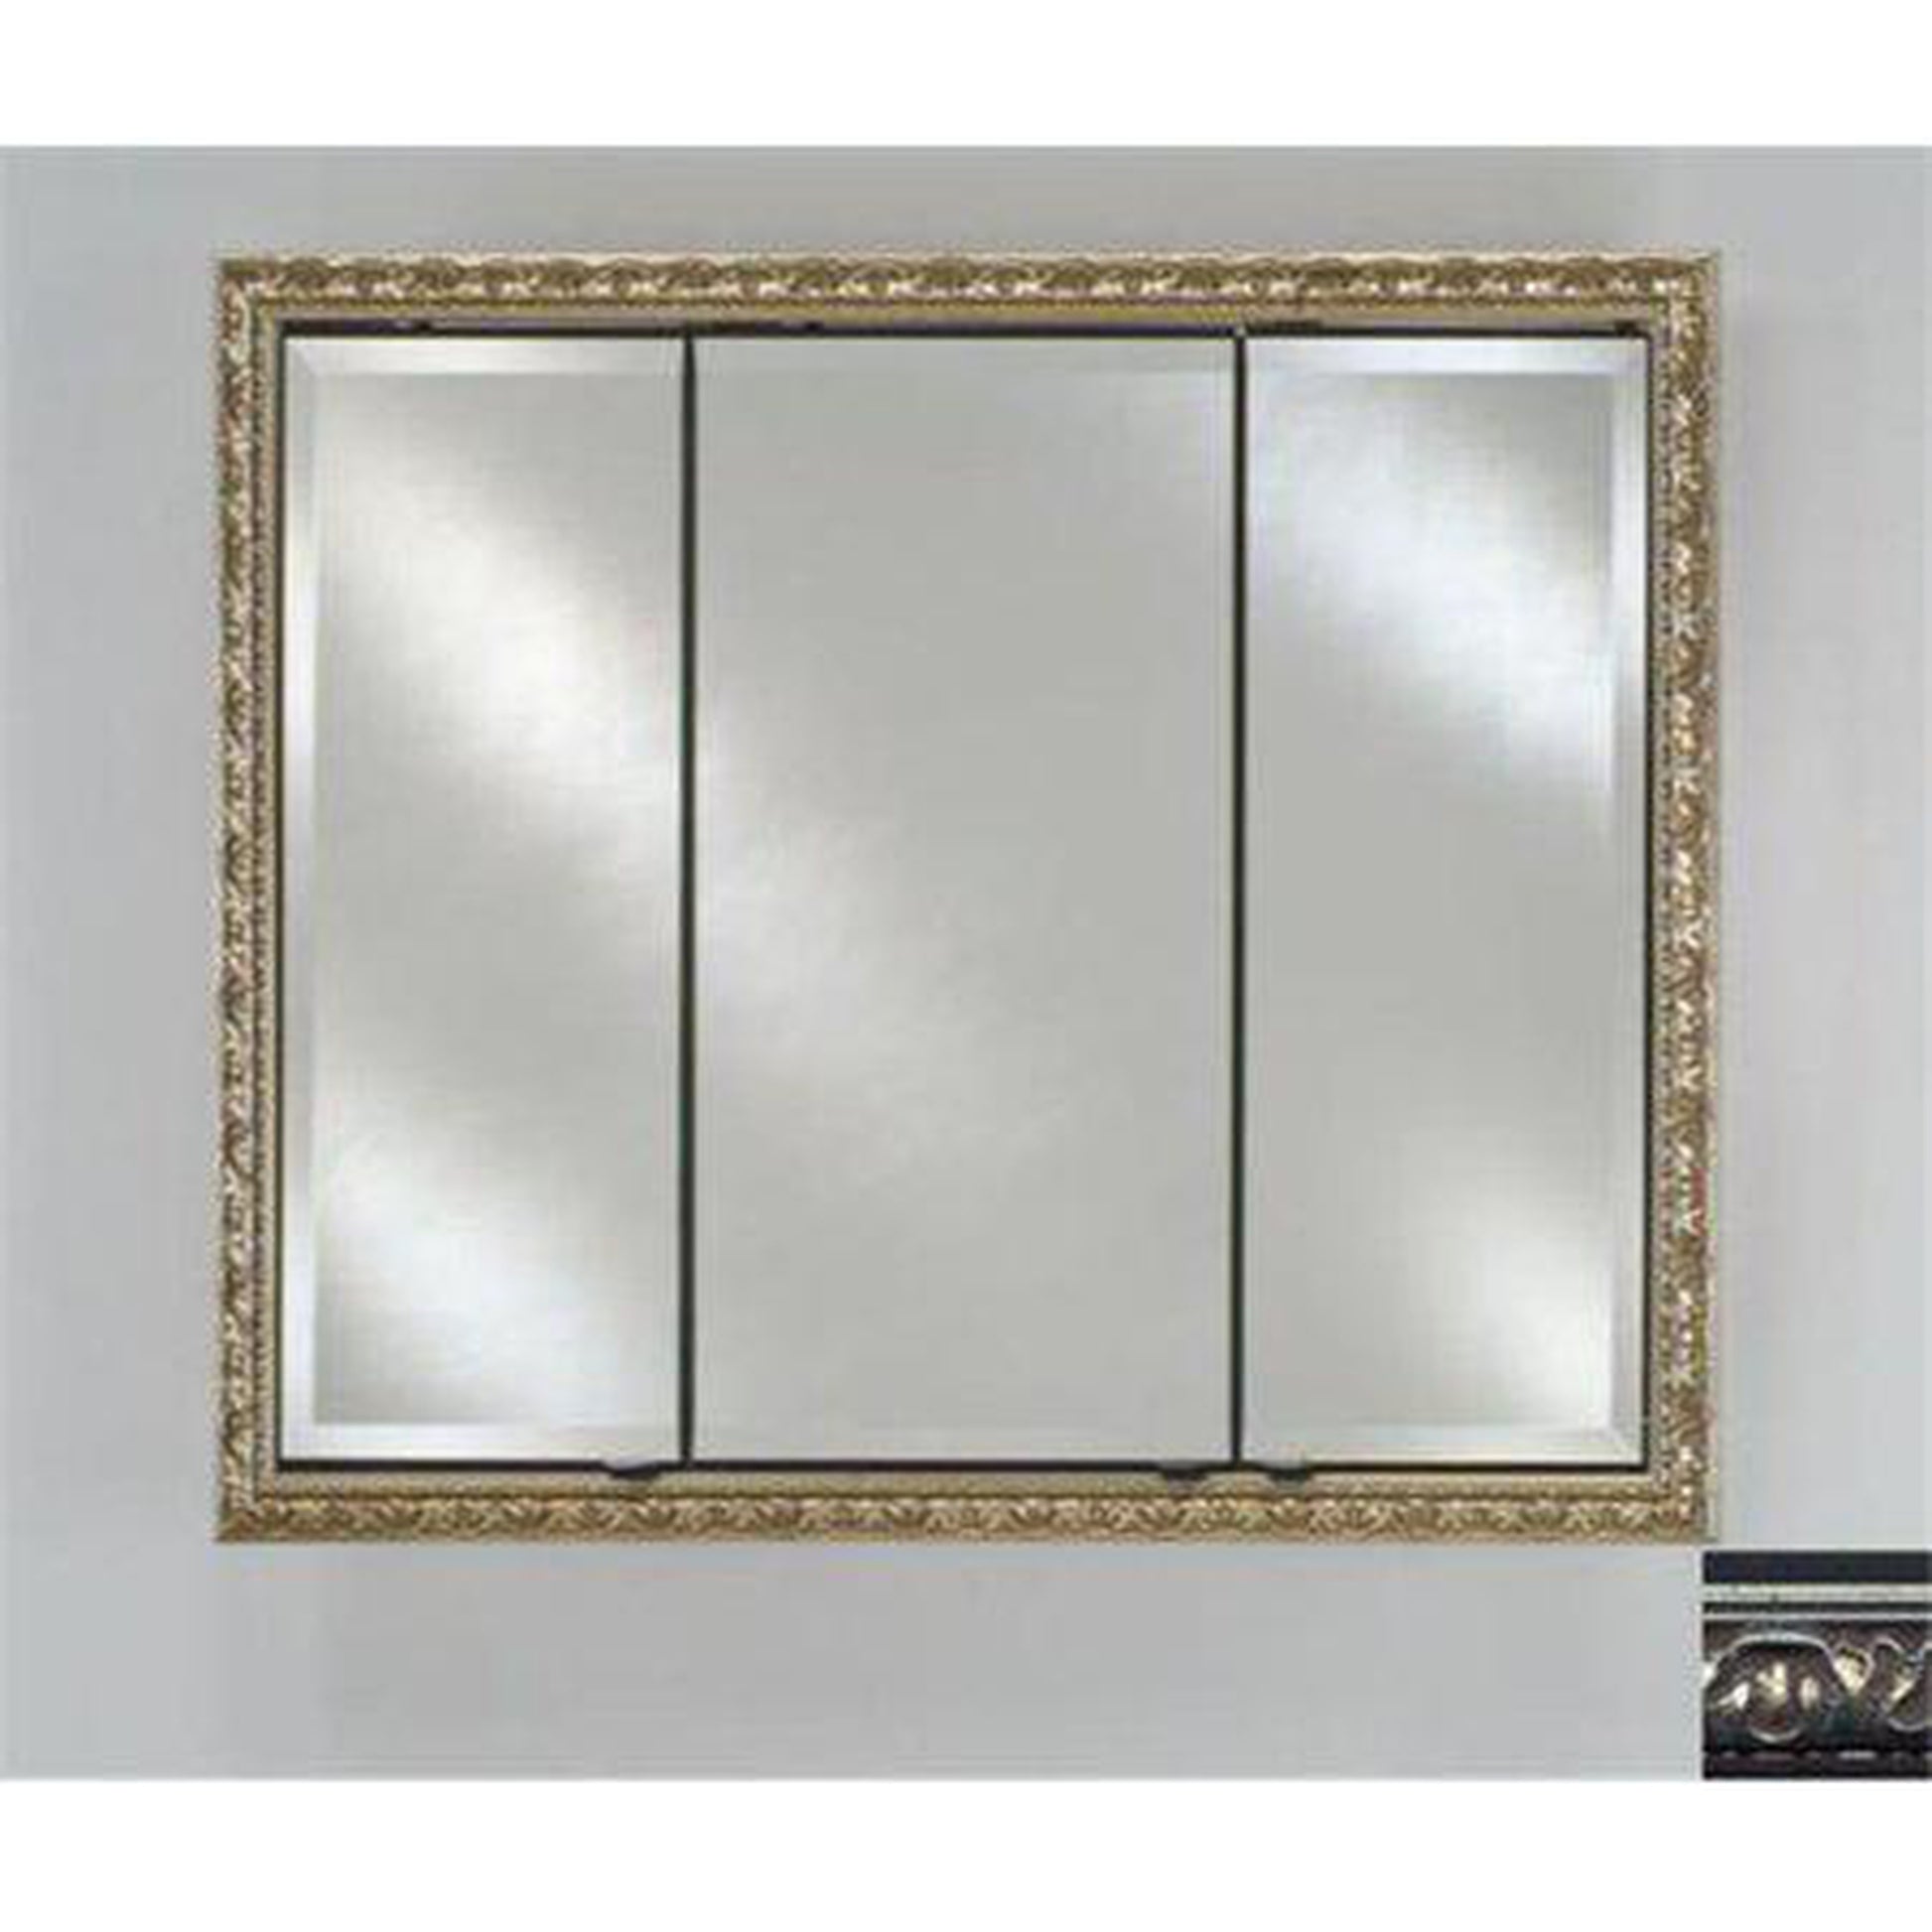 Afina Signature 44" x 30" Valencia Antique Silver Recessed Triple Door Medicine Cabinet With Beveled Edge Mirror